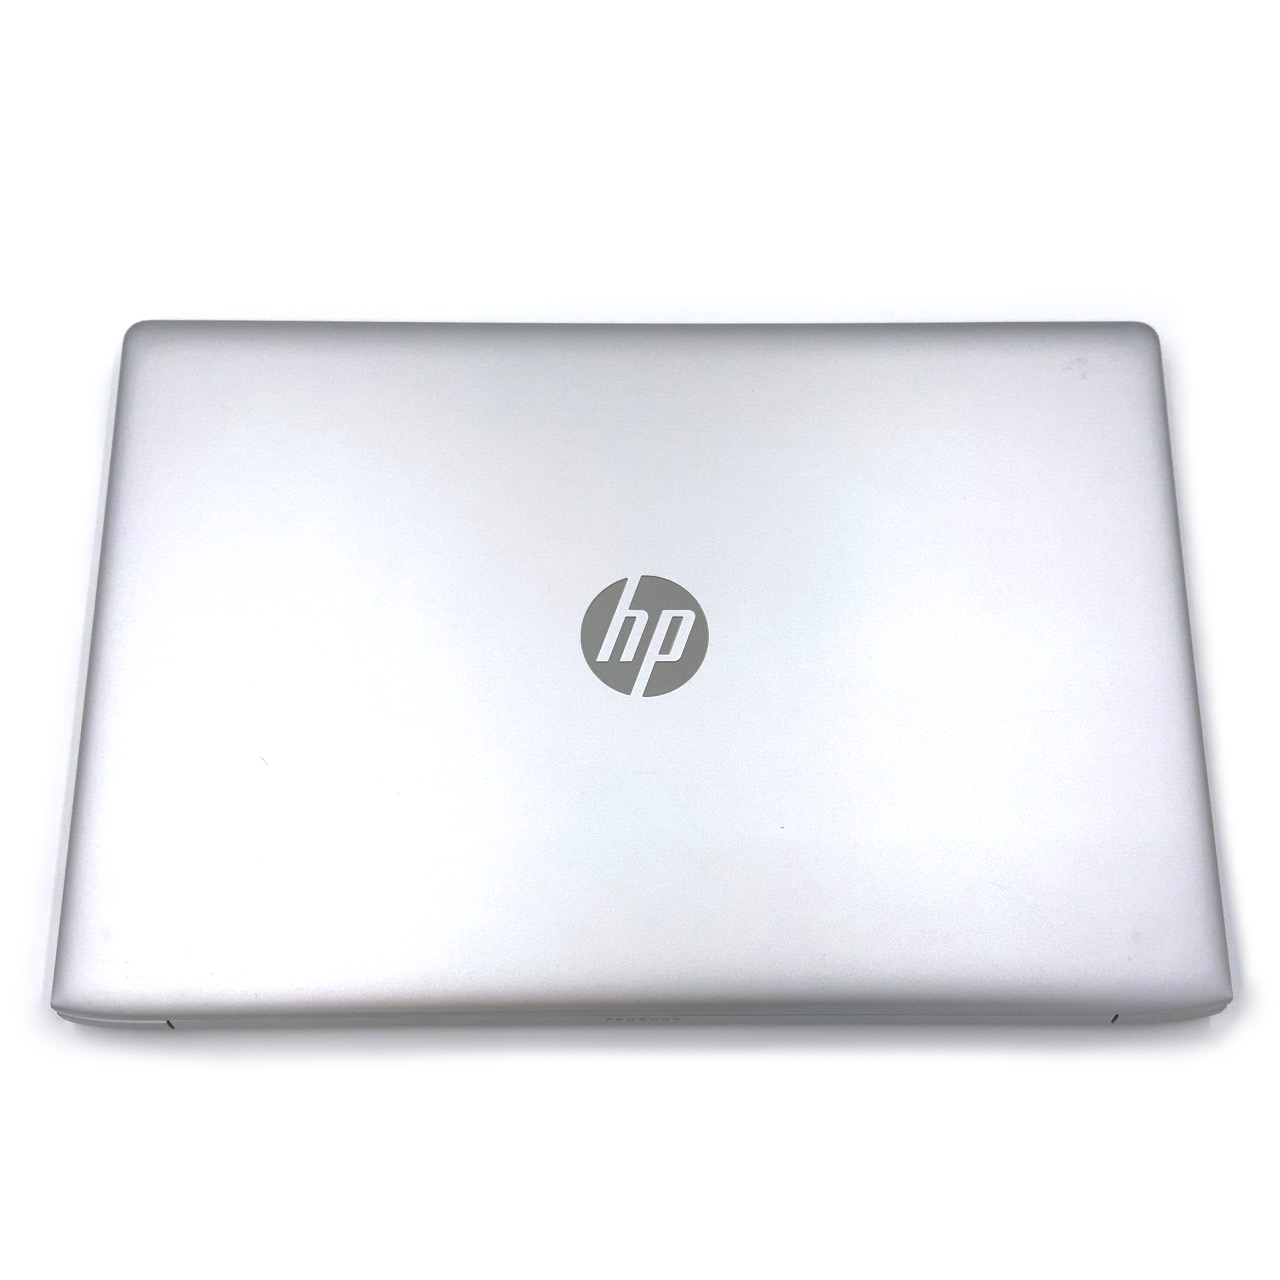 【Windows11】 【大画面17.3インチ】 【高解像度液晶】 HP ProBook 470 G5 第8世代 Core i5 8250U 64GB HDD250GB 64bit WPSOffice 17.3インチ HD+ カメラ テンキー 無線LAN パソコン ノートパソコン PC Notebook 7